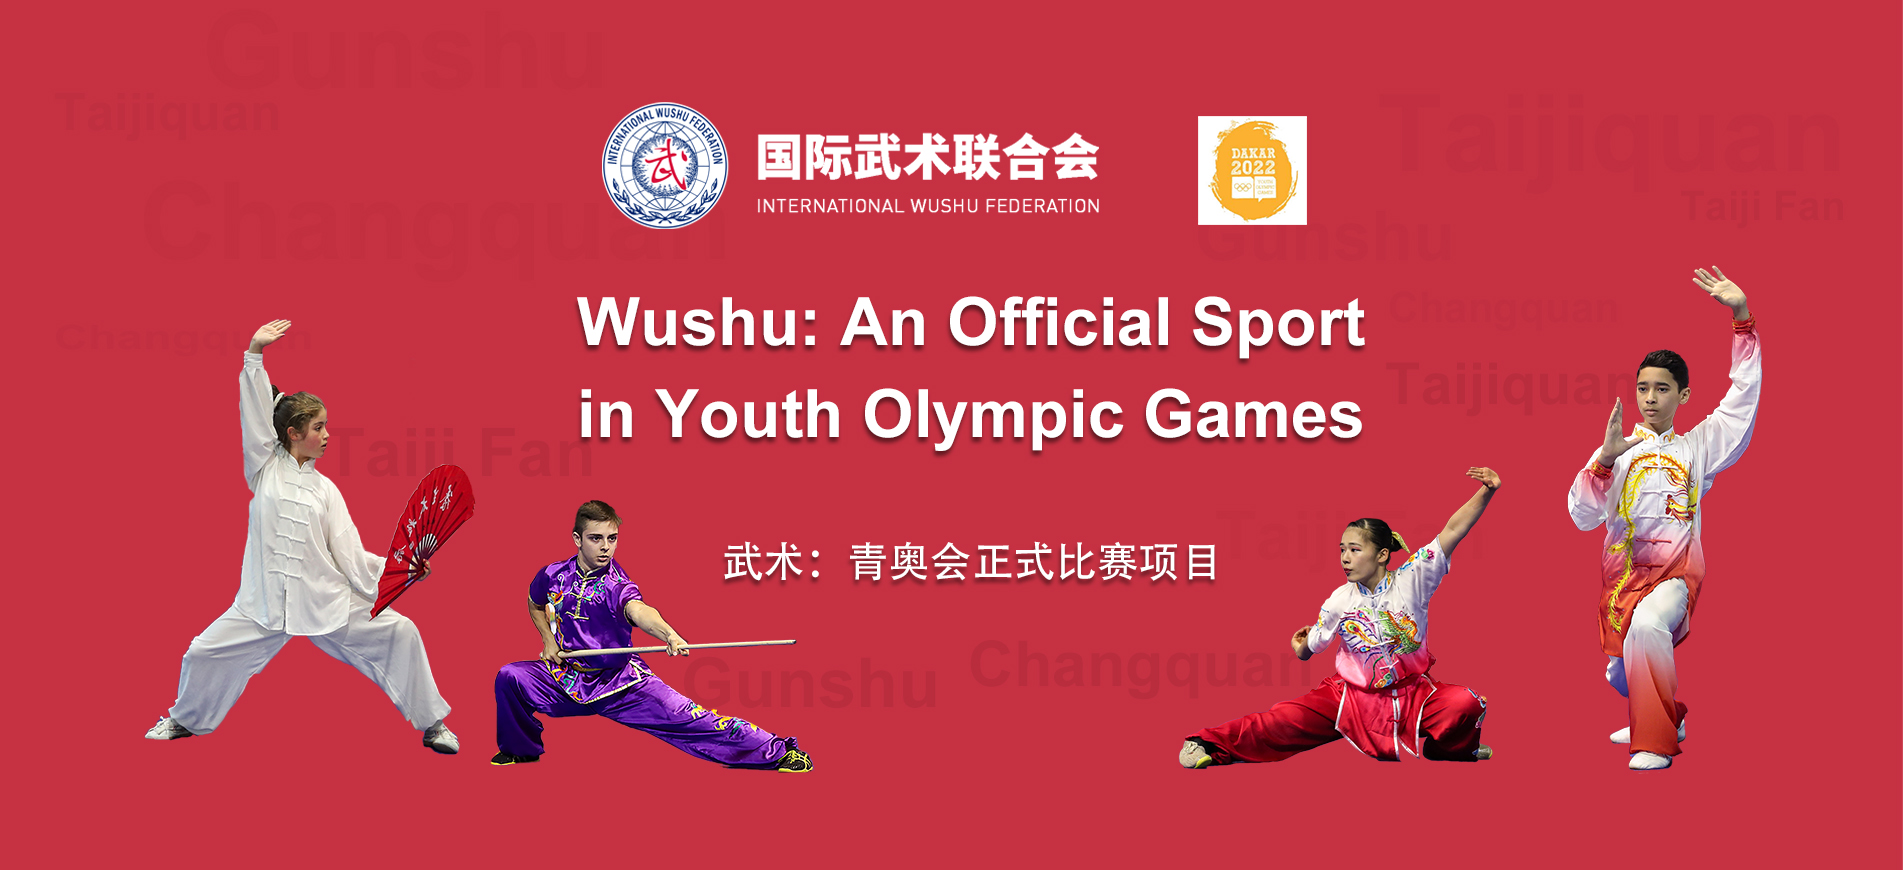 Olympics wushu Wushu kicks